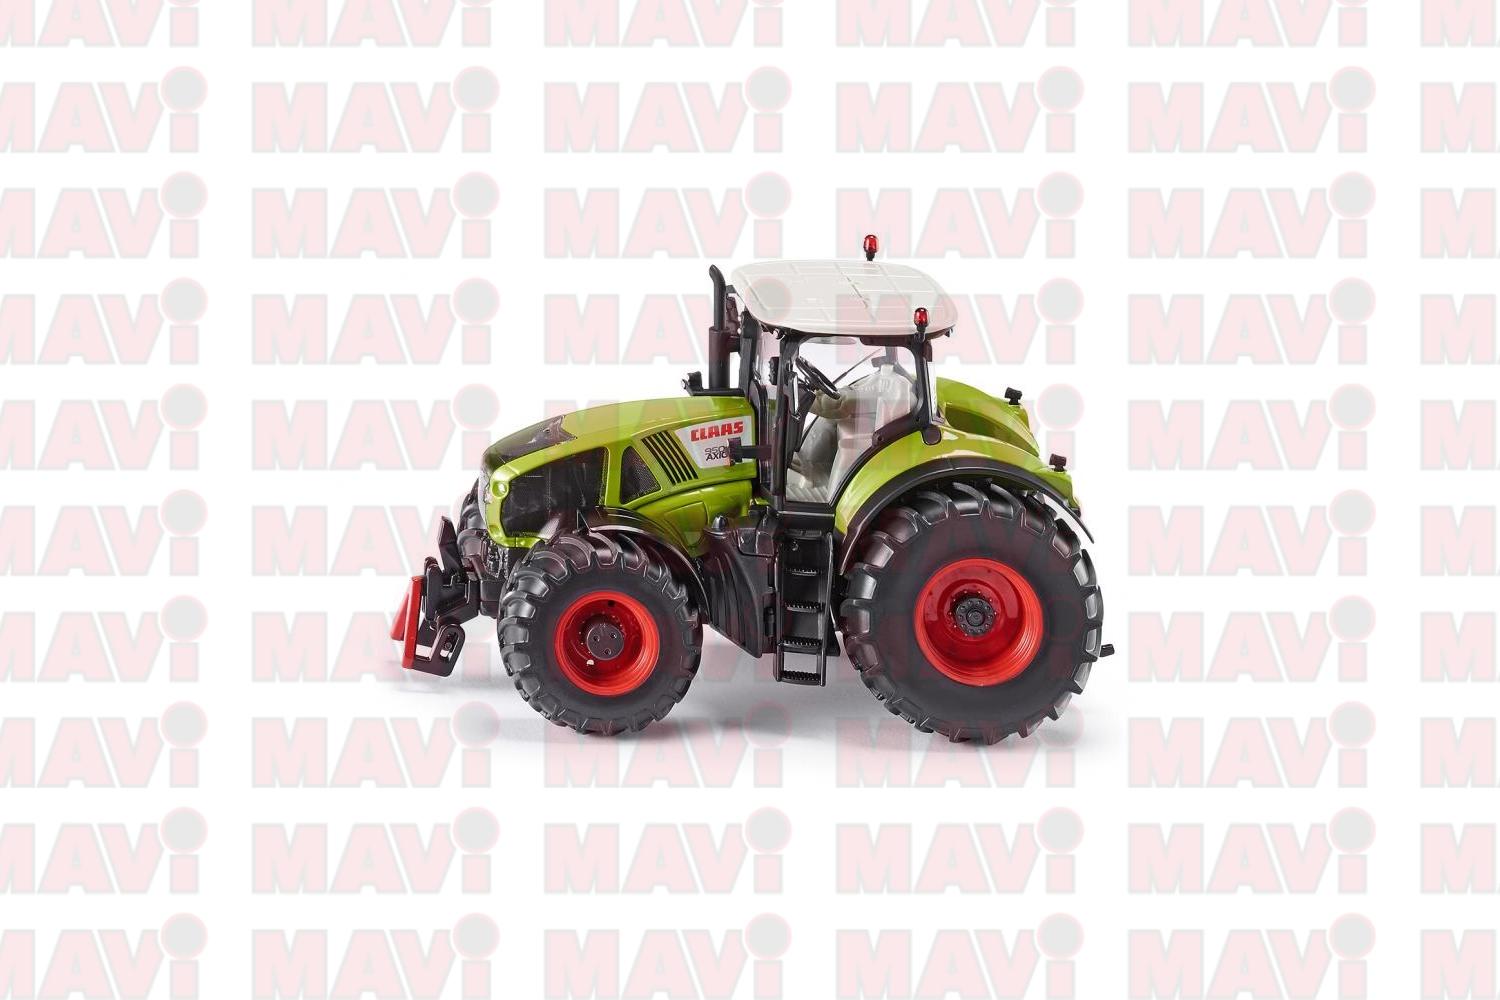 Jucarie Siku tractor Claas Axion 950 1:32, 250x151x102 mm # 3280